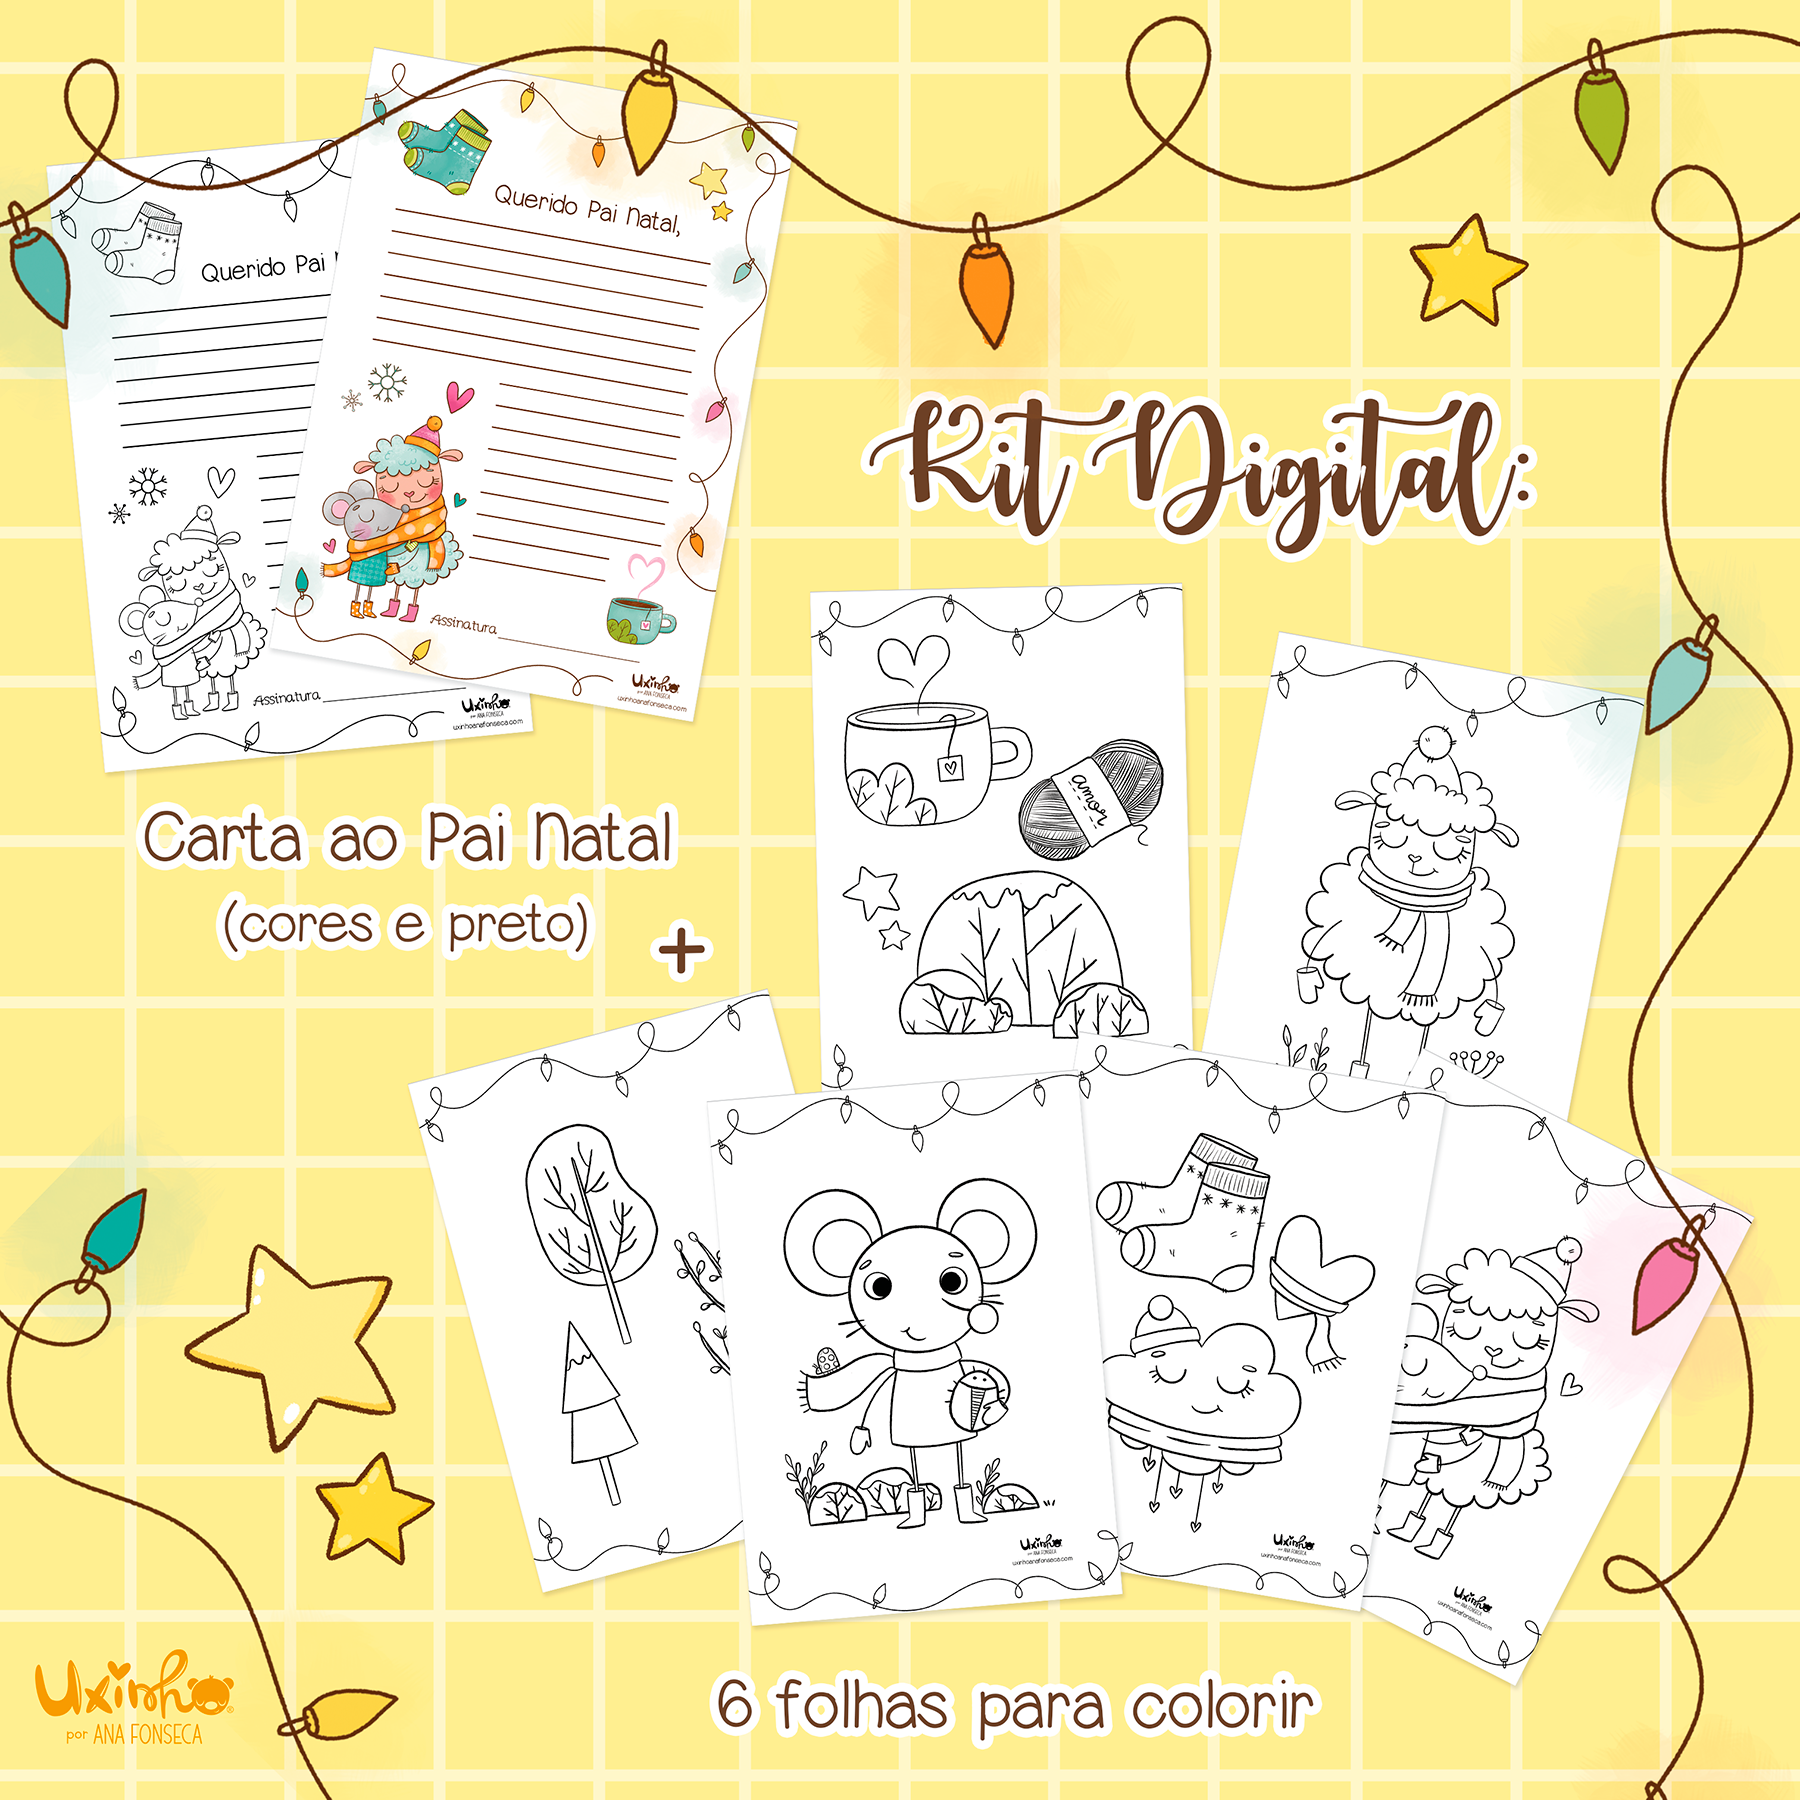 Uxinho por Ana Fonseca - Kit DIGITAL